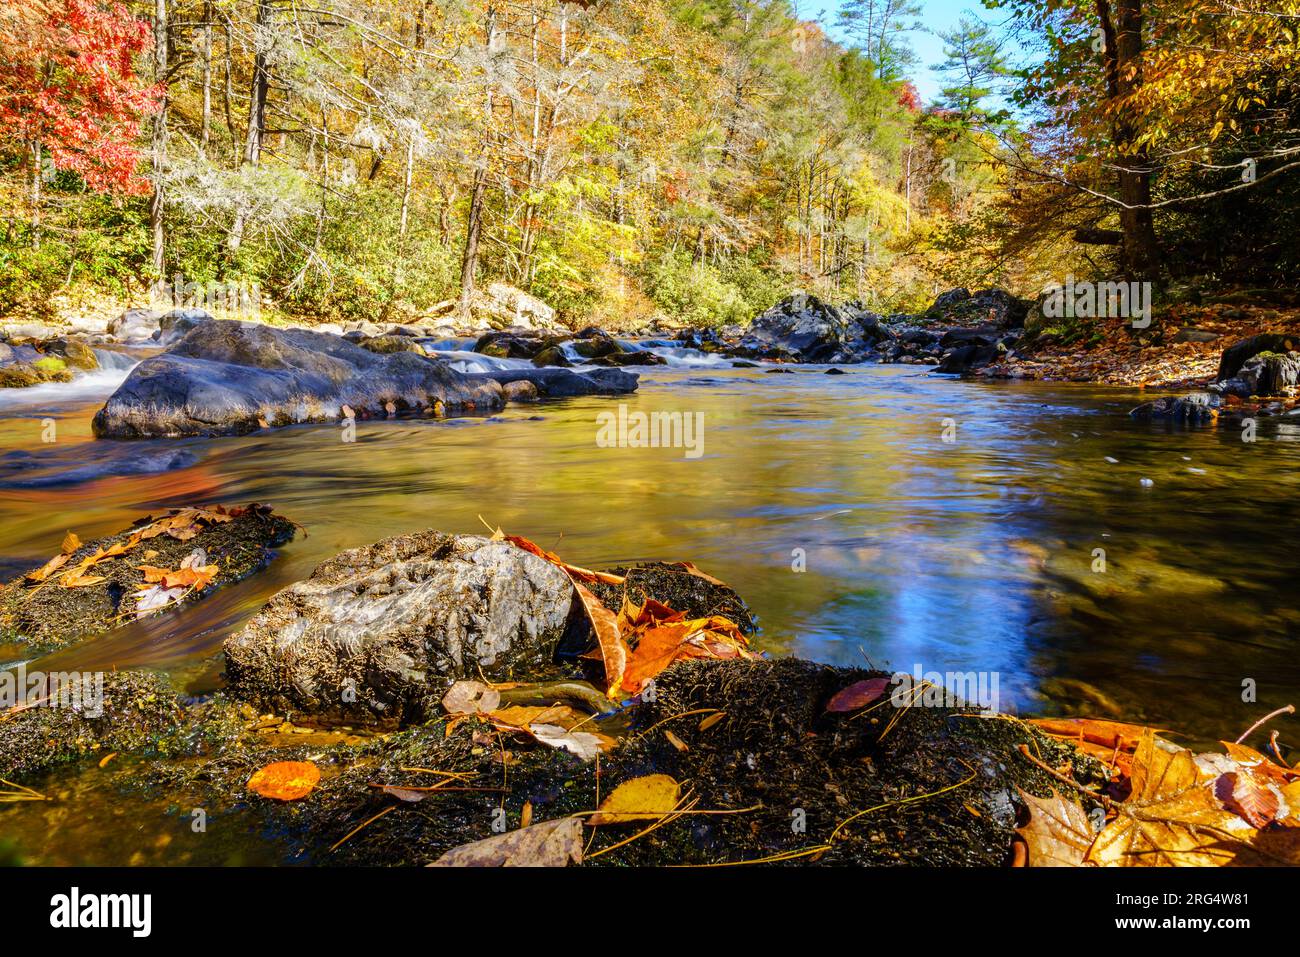 Scenic view of Big Laurel Creek in North Carolina in falltranq Stock Photo